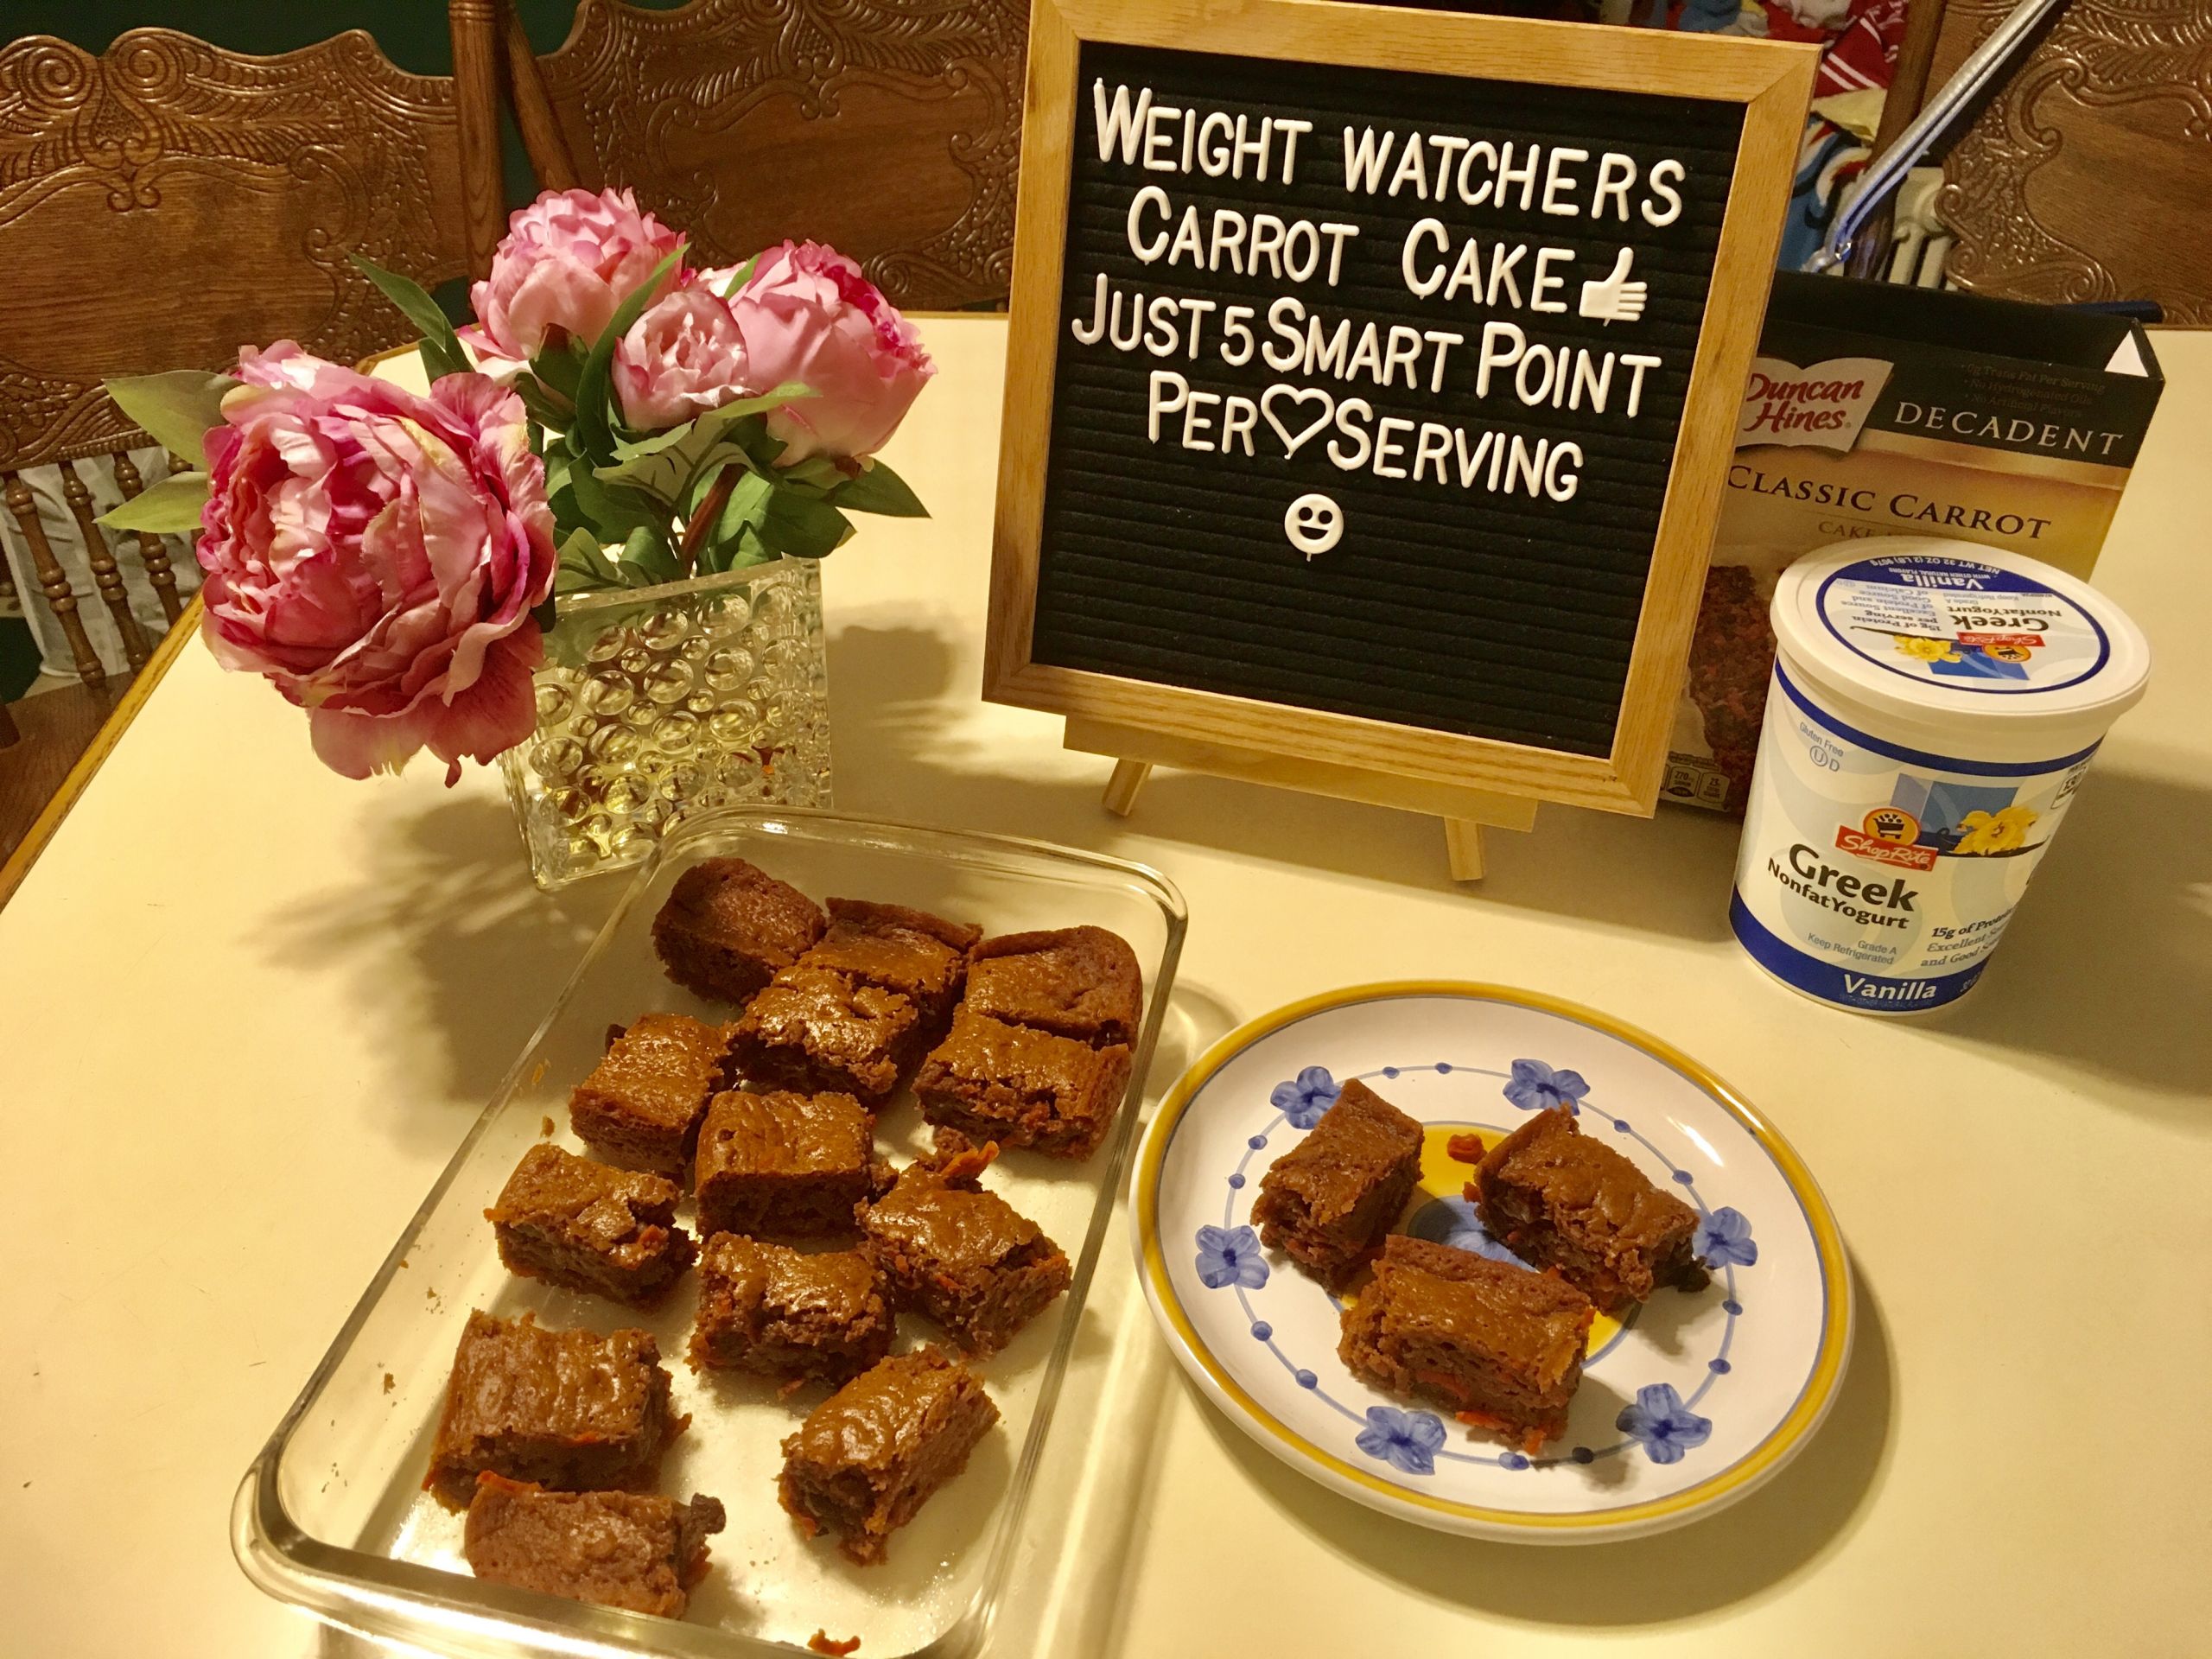 Weight Watcher Carrot Cake
 Weight Watchers Carrot Cake Recipe 5 SmartPoints The